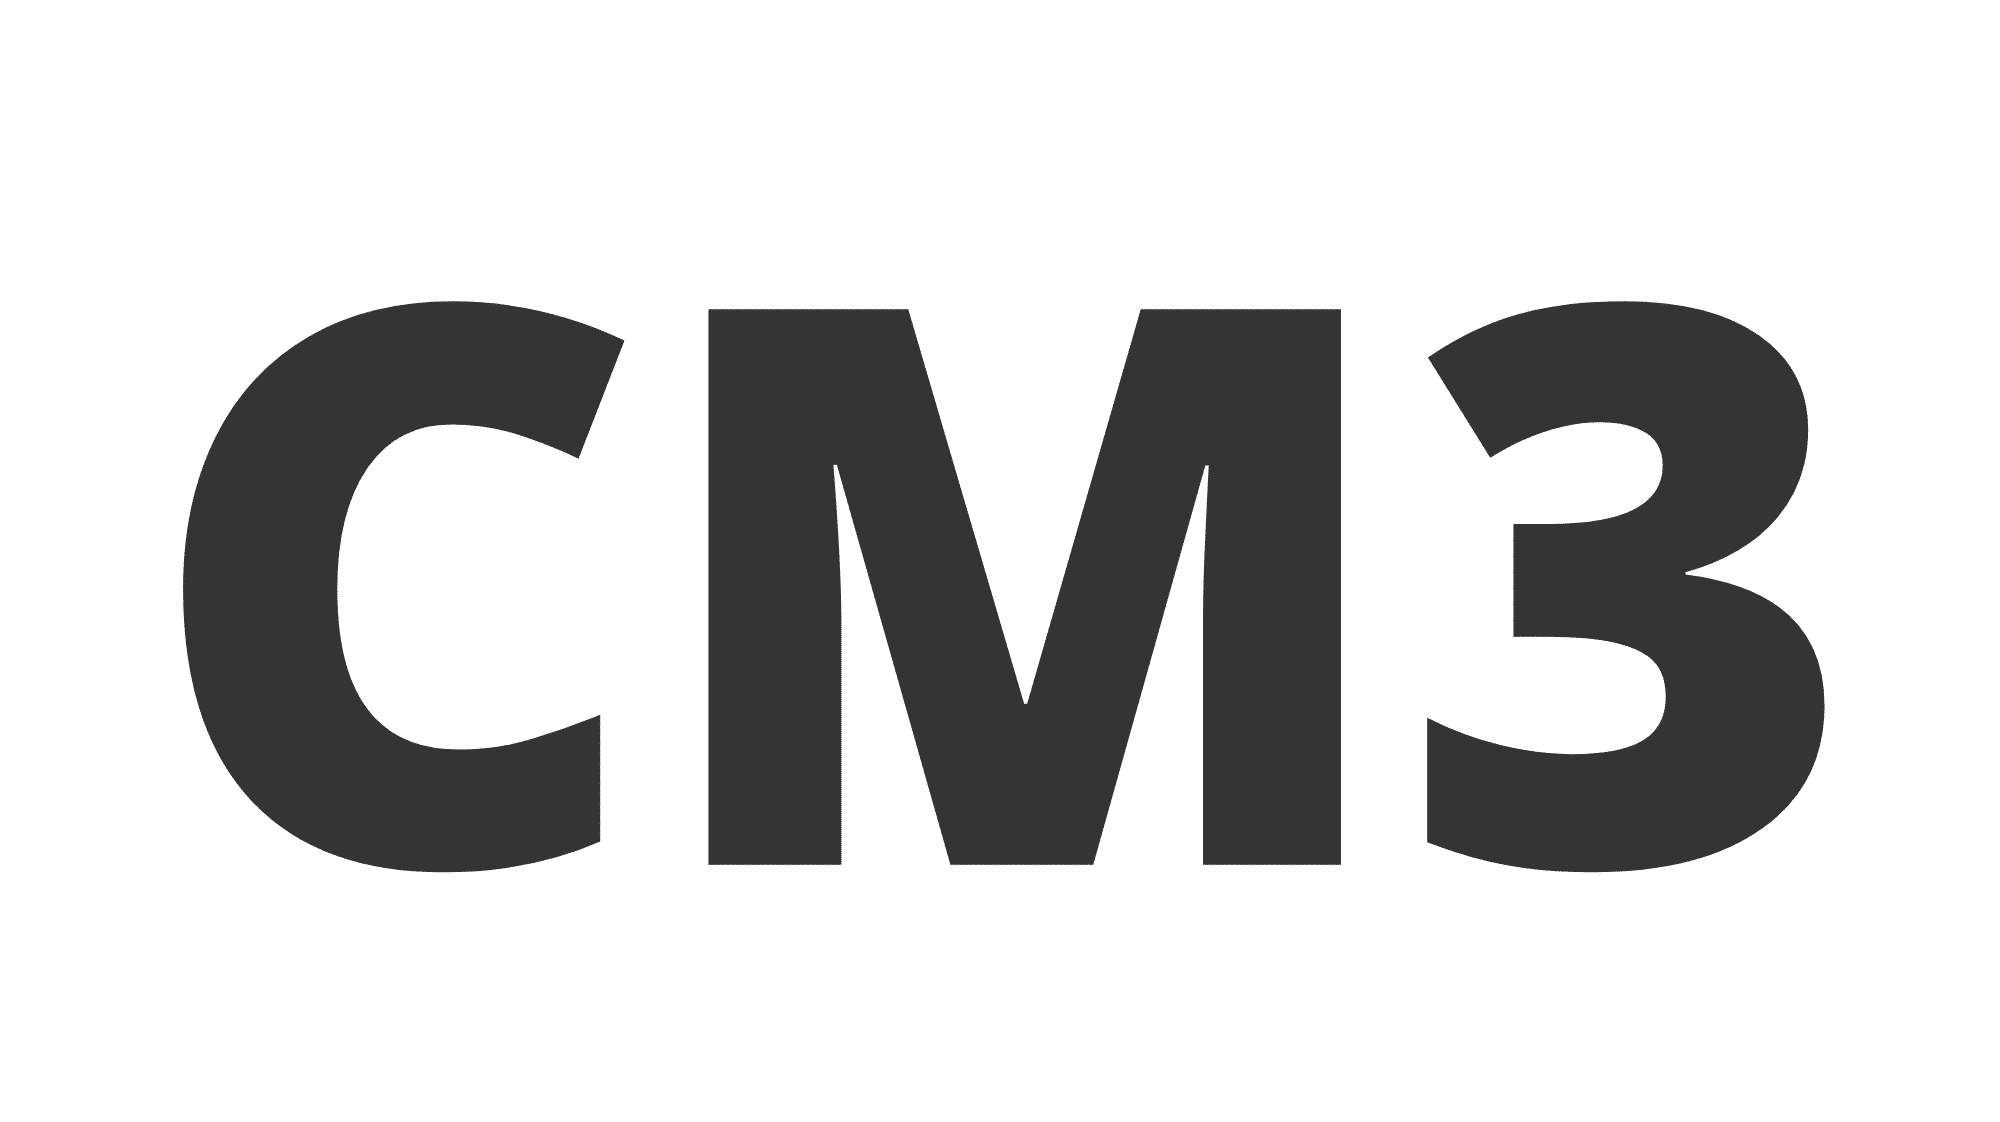 CM3 logo